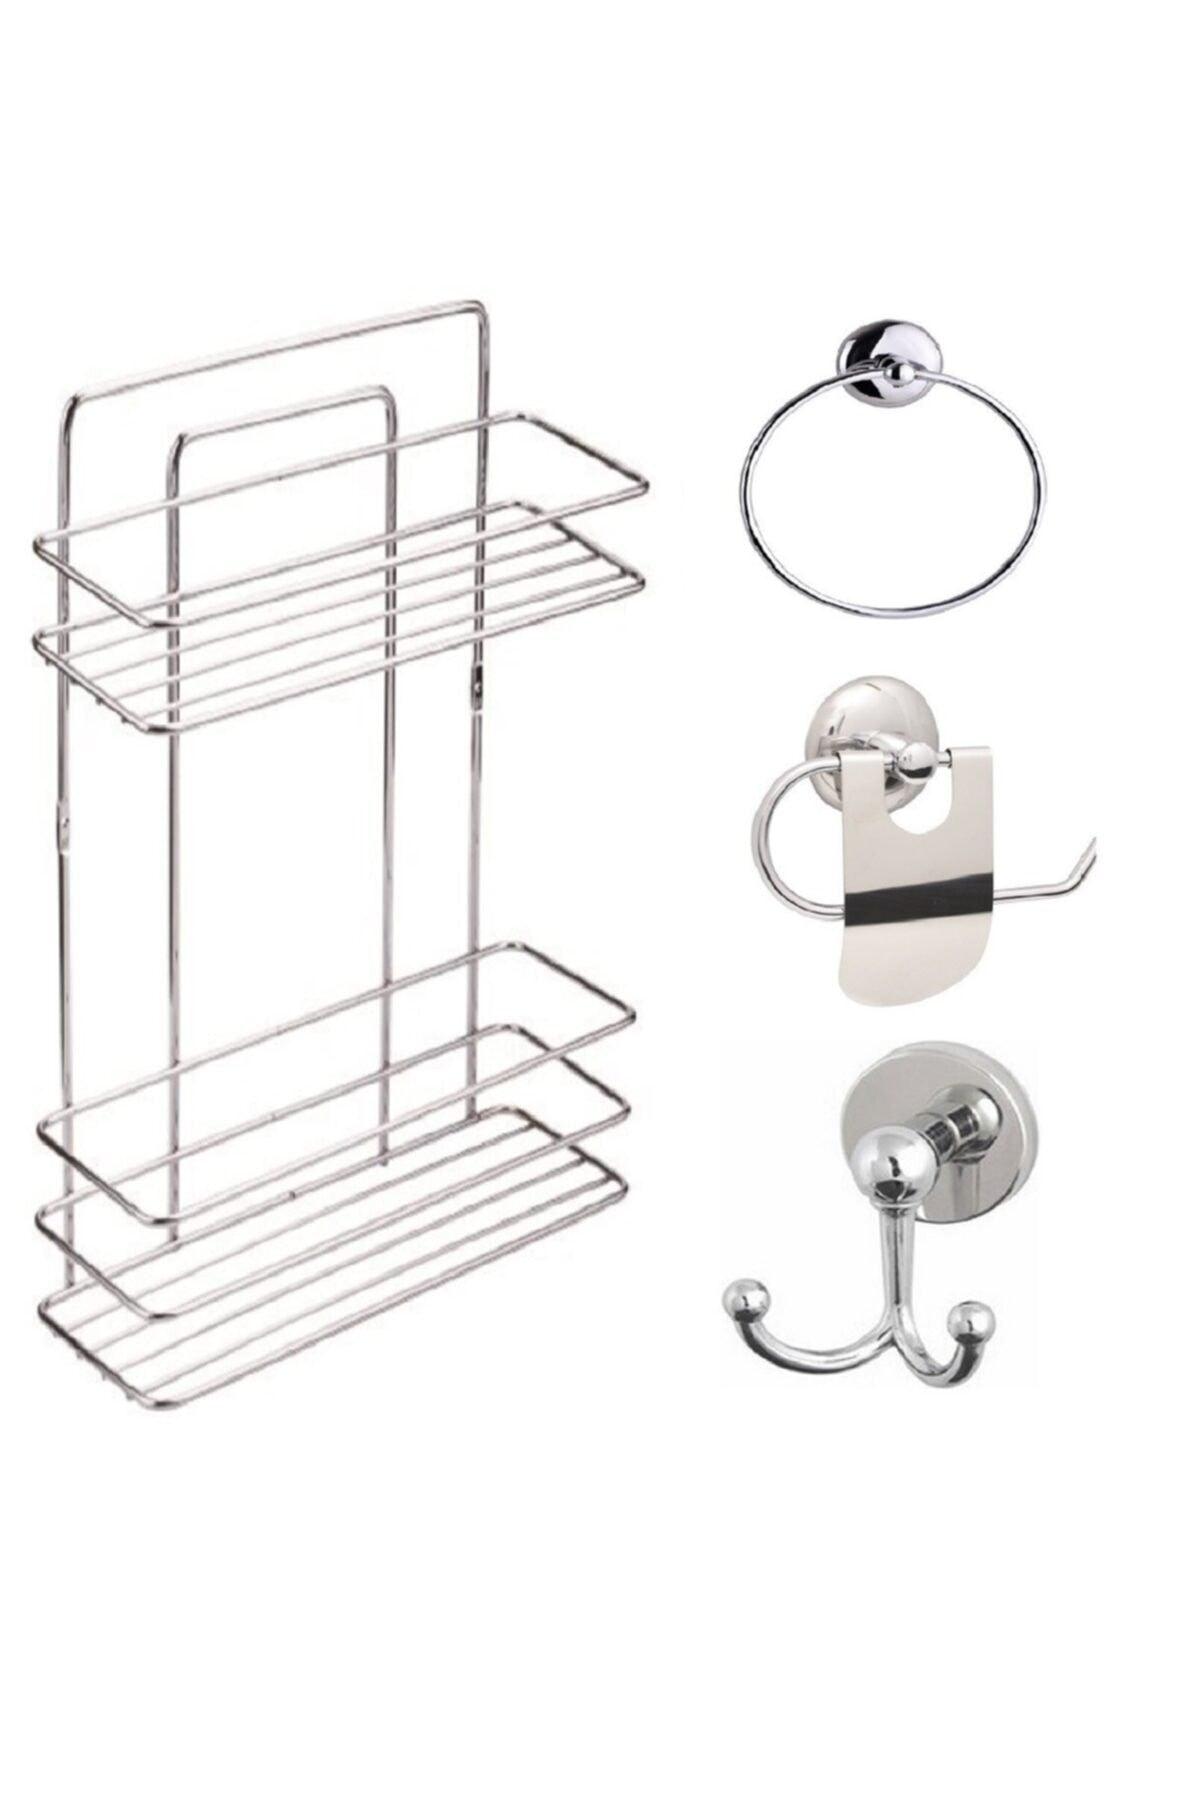 Bathroom Accessory Set 4 Chrome , Stainless Straight Shower Shelf Shampoo Holder Chrome Tş-02 - Swordslife